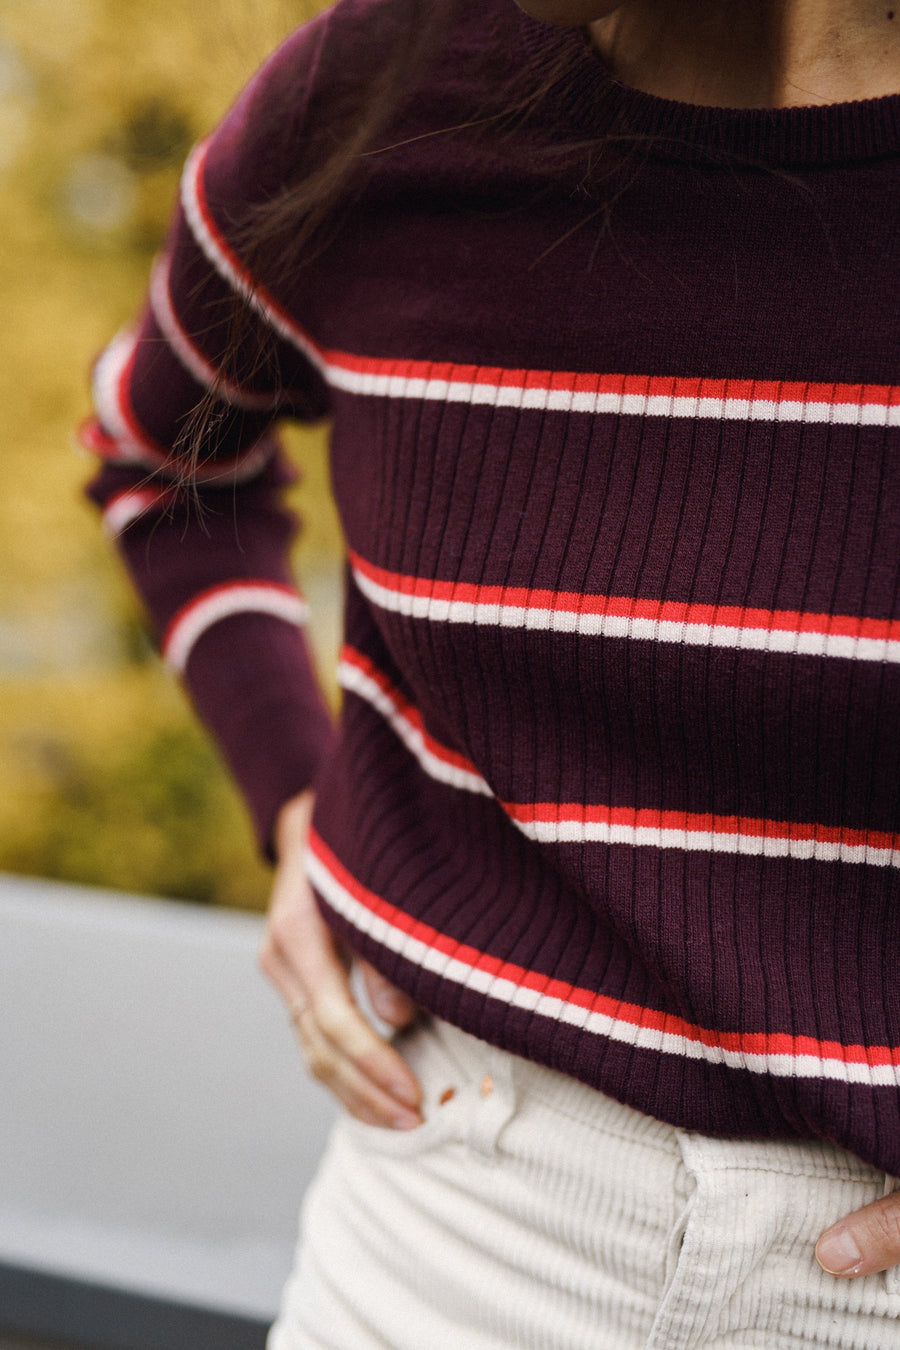 Janes - Striped Sweater Burgundy - Janes Knitwear with a twist